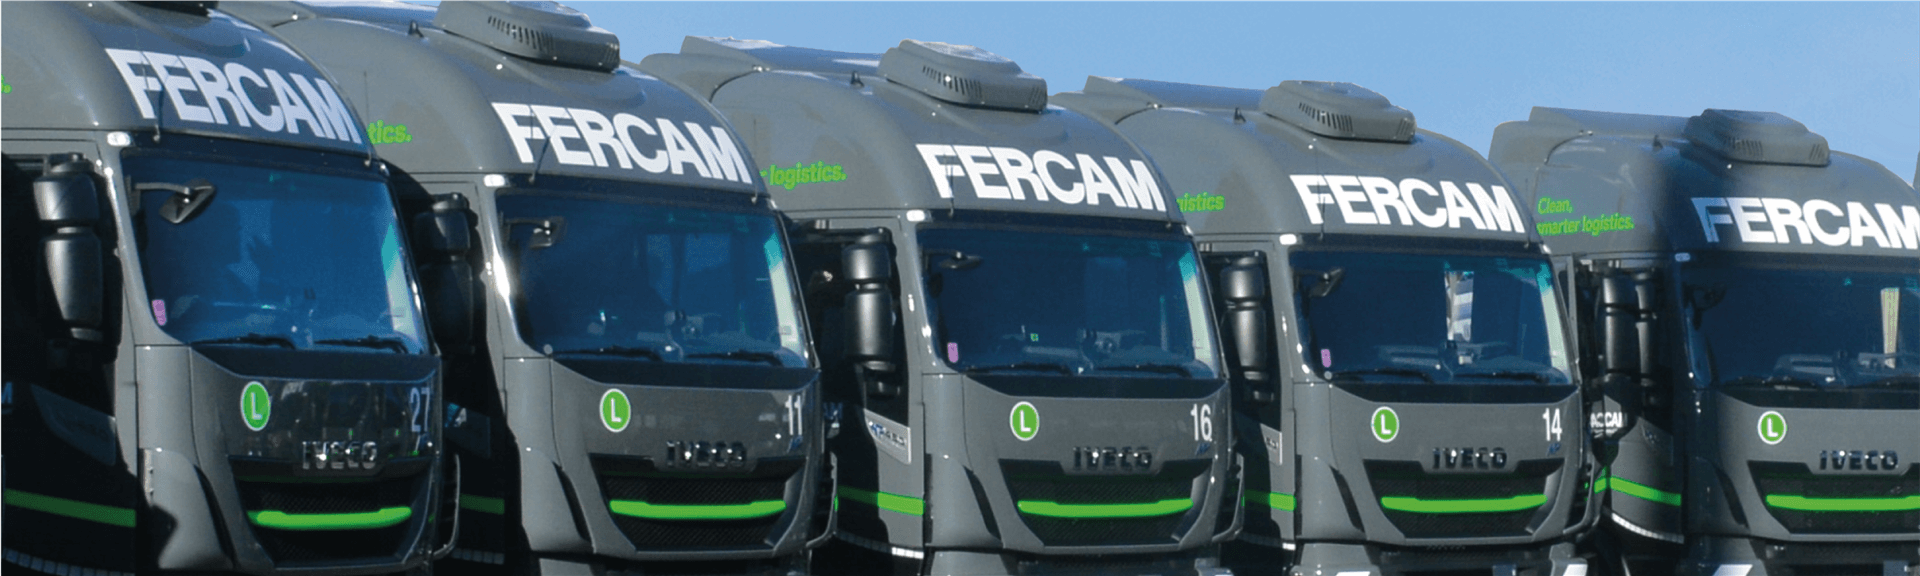 FERCAM - Emission Free Transport